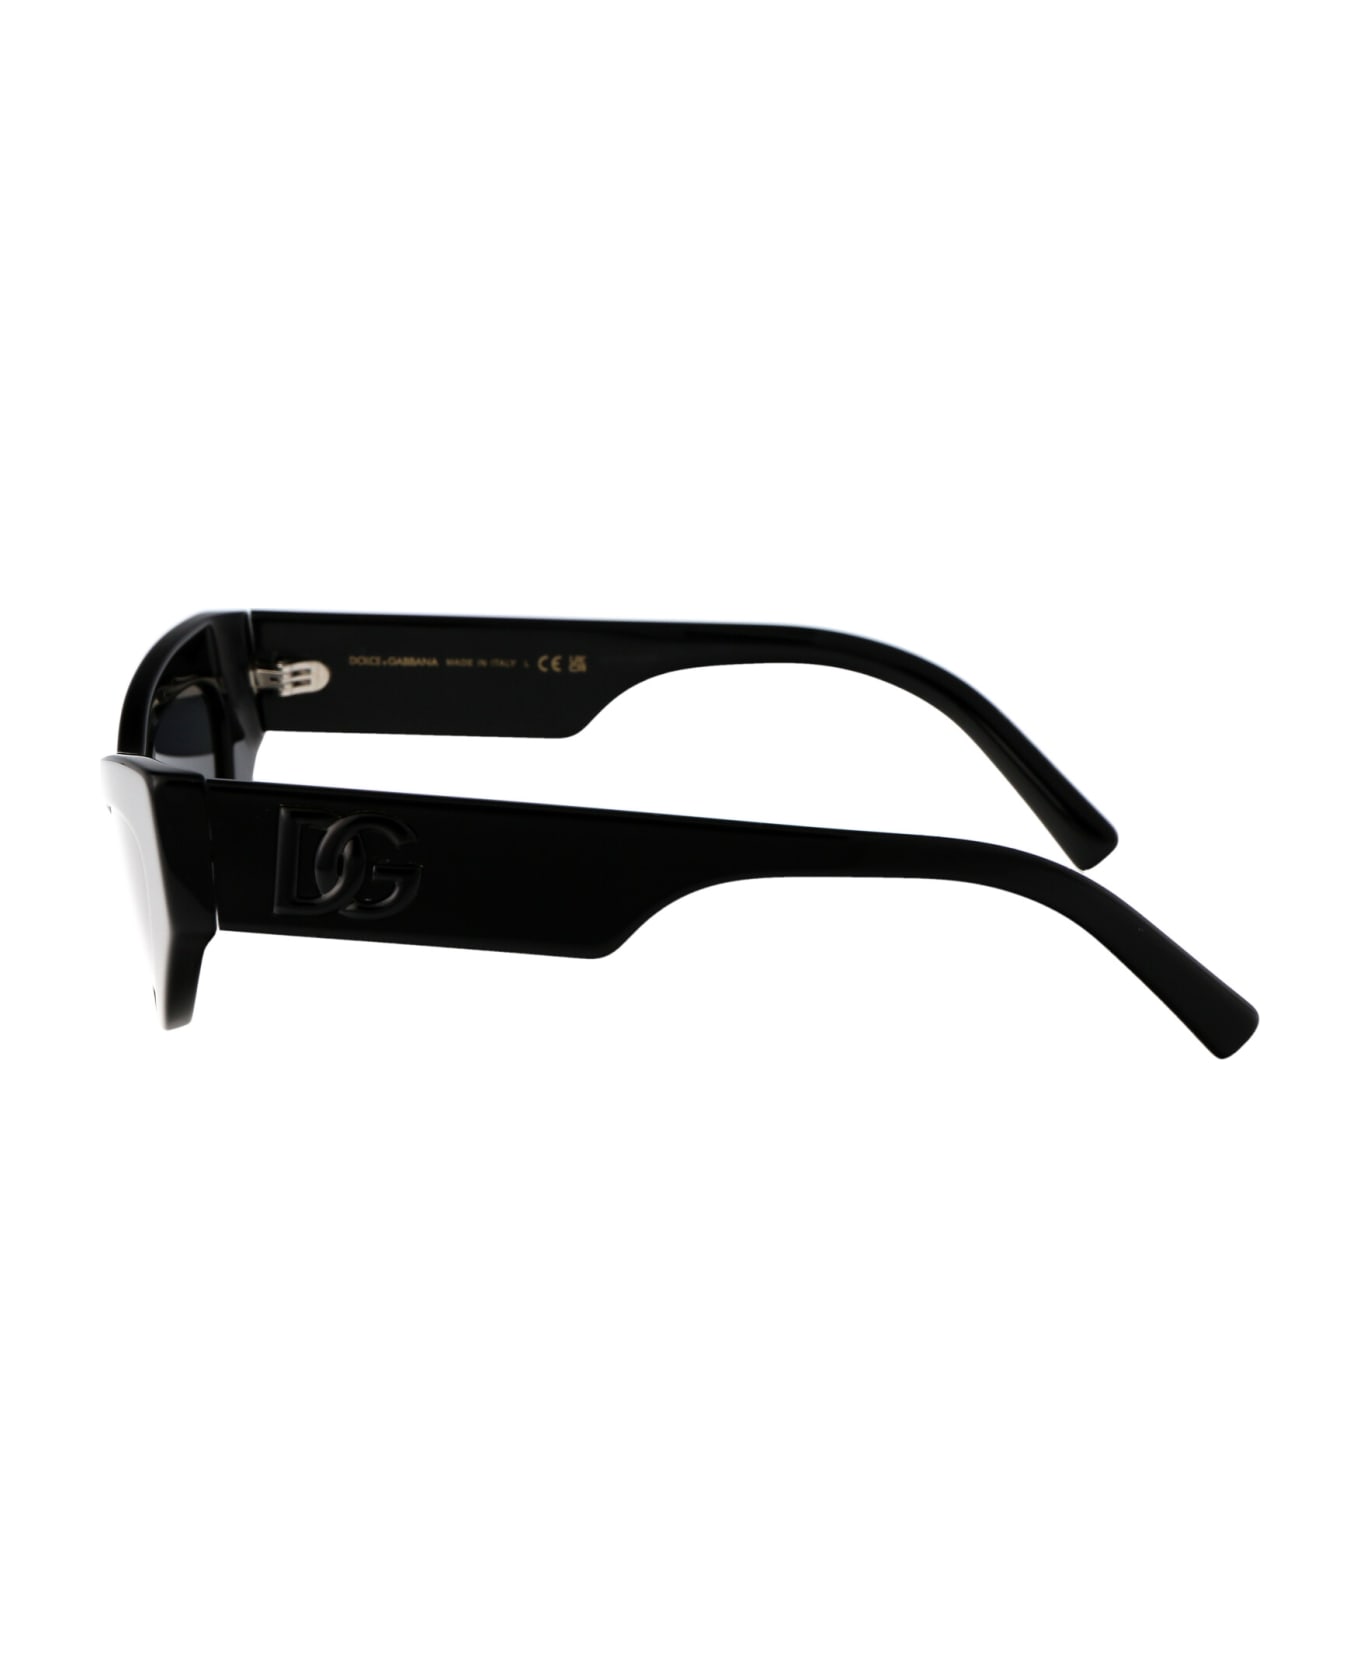 Sunglasses Pebble from Oakley Eyewear 0dg4450 Sunglasses Pebble - 501/87 BLACK